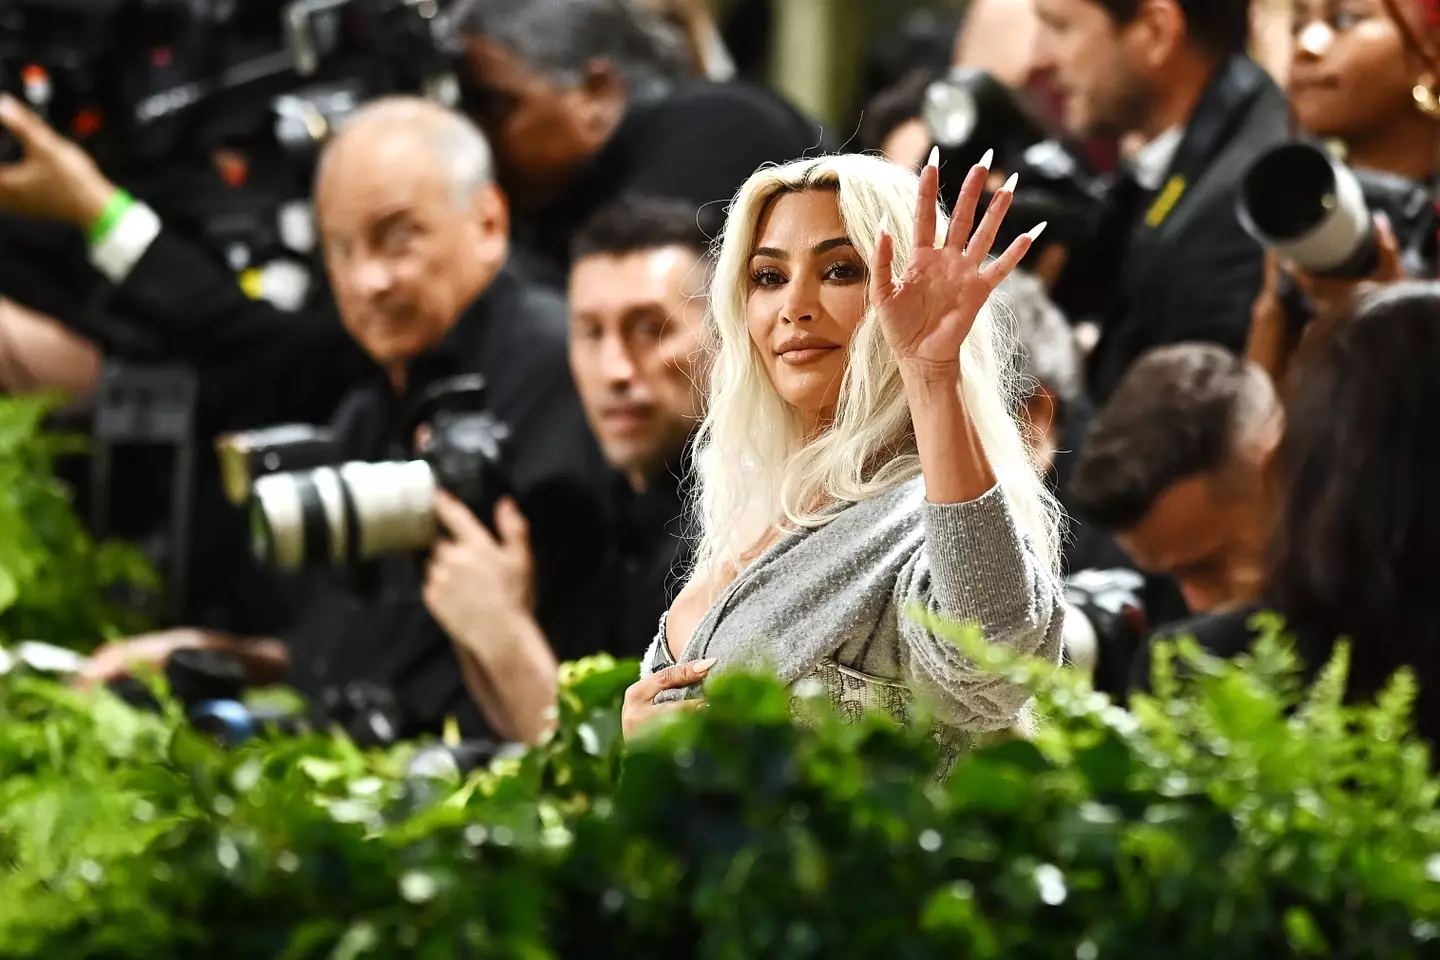 Kim Kardashian was among dozens of stars at the event. (Bauzen/GC Images)